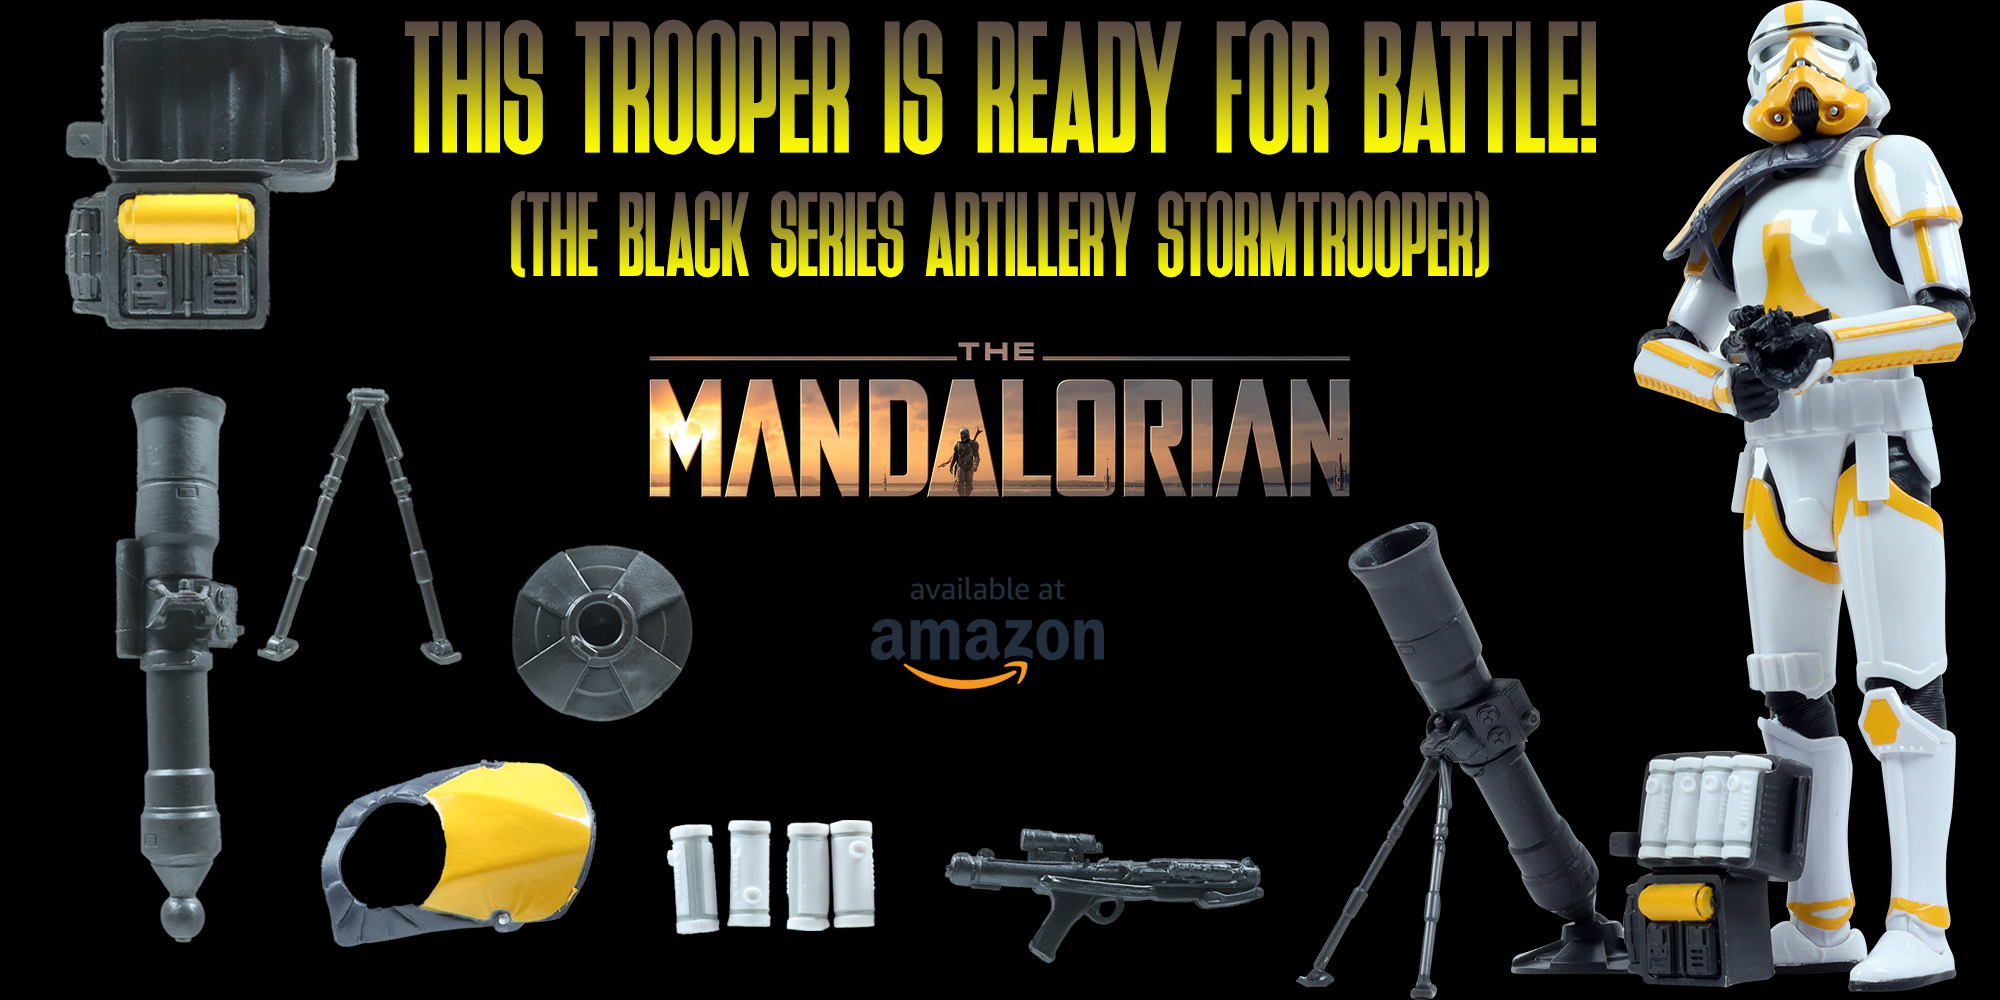 Black Series Artillery Stormtrooper Added